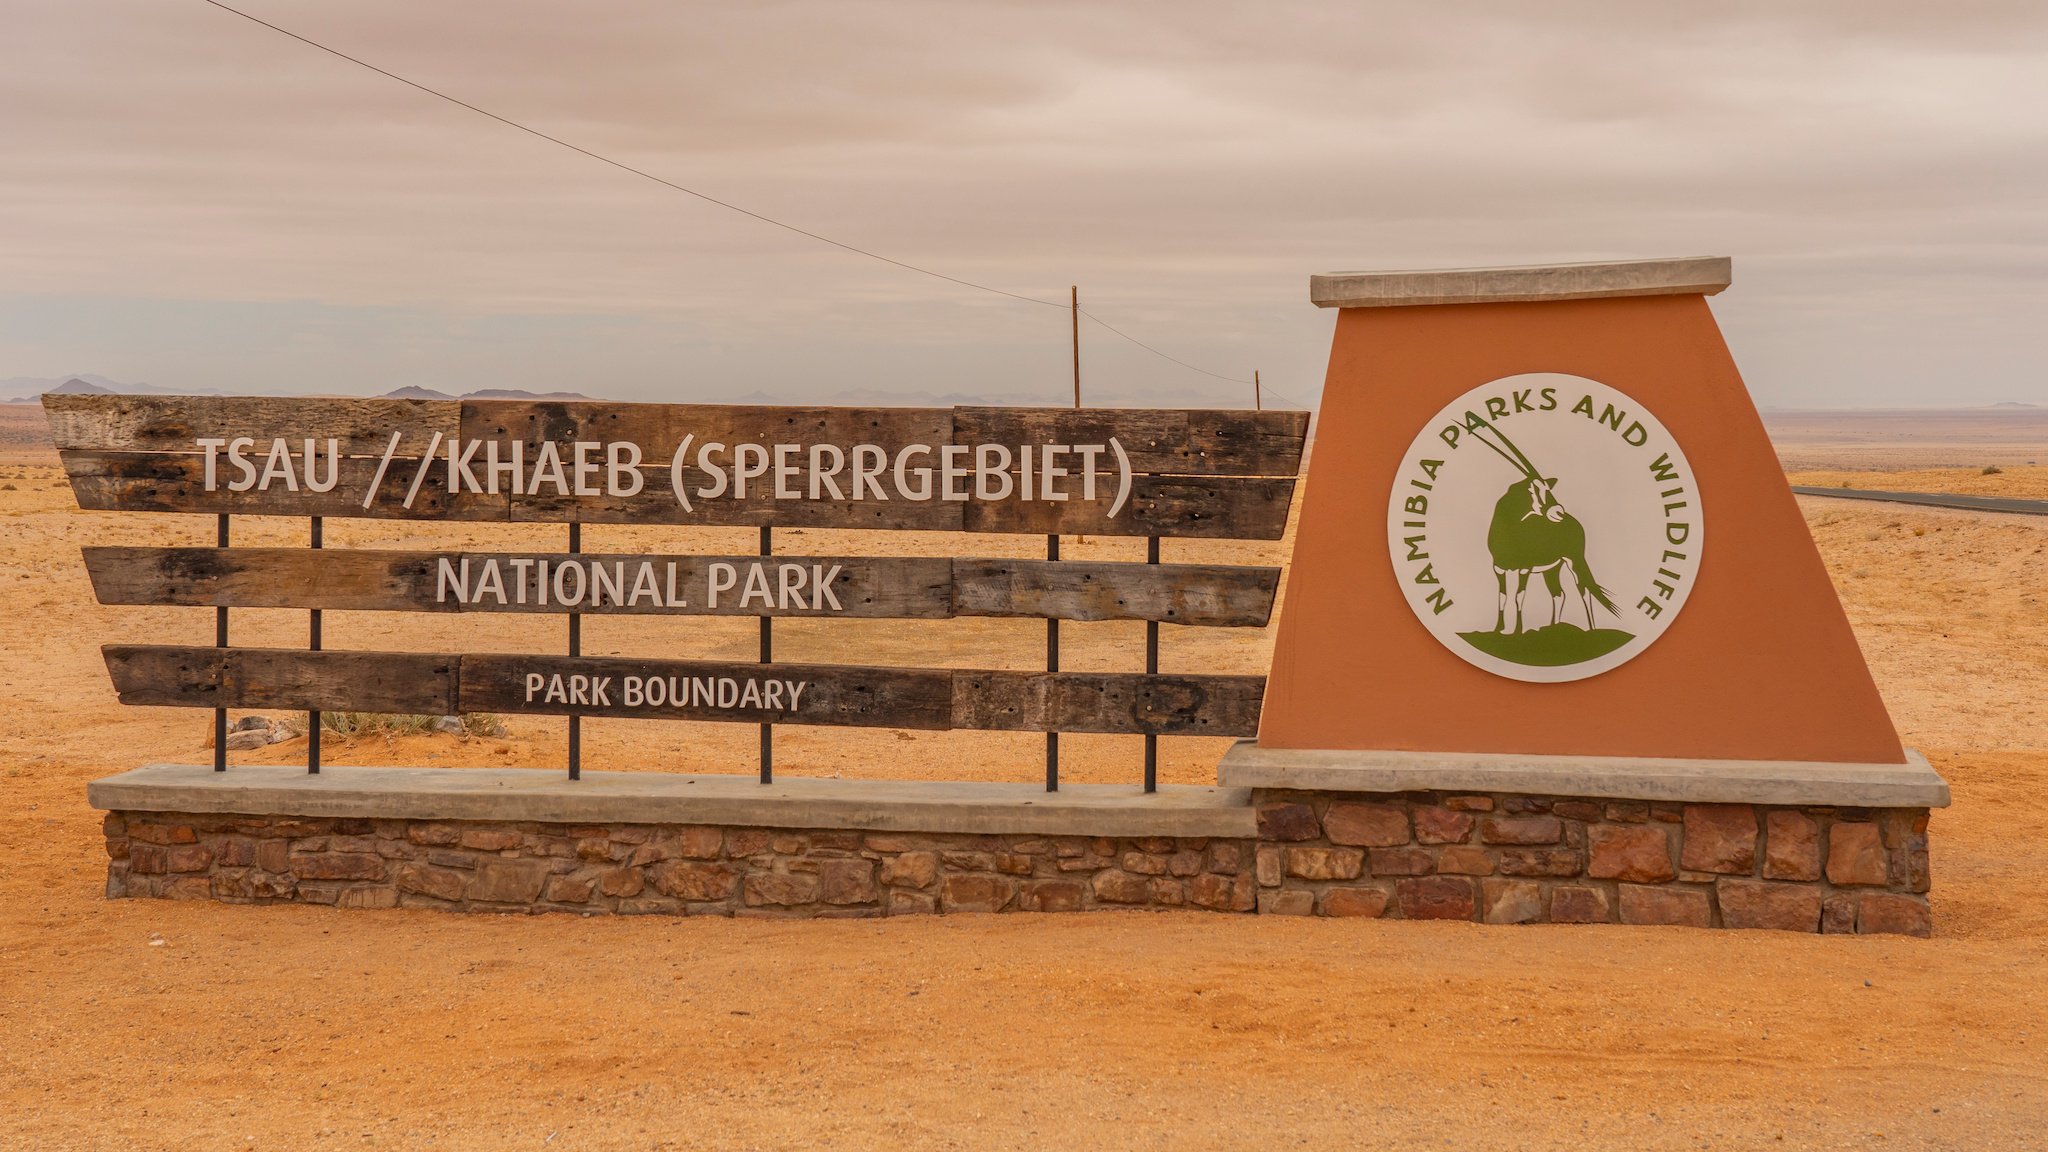 Nationalpark Tsau Khaeb in Namibia